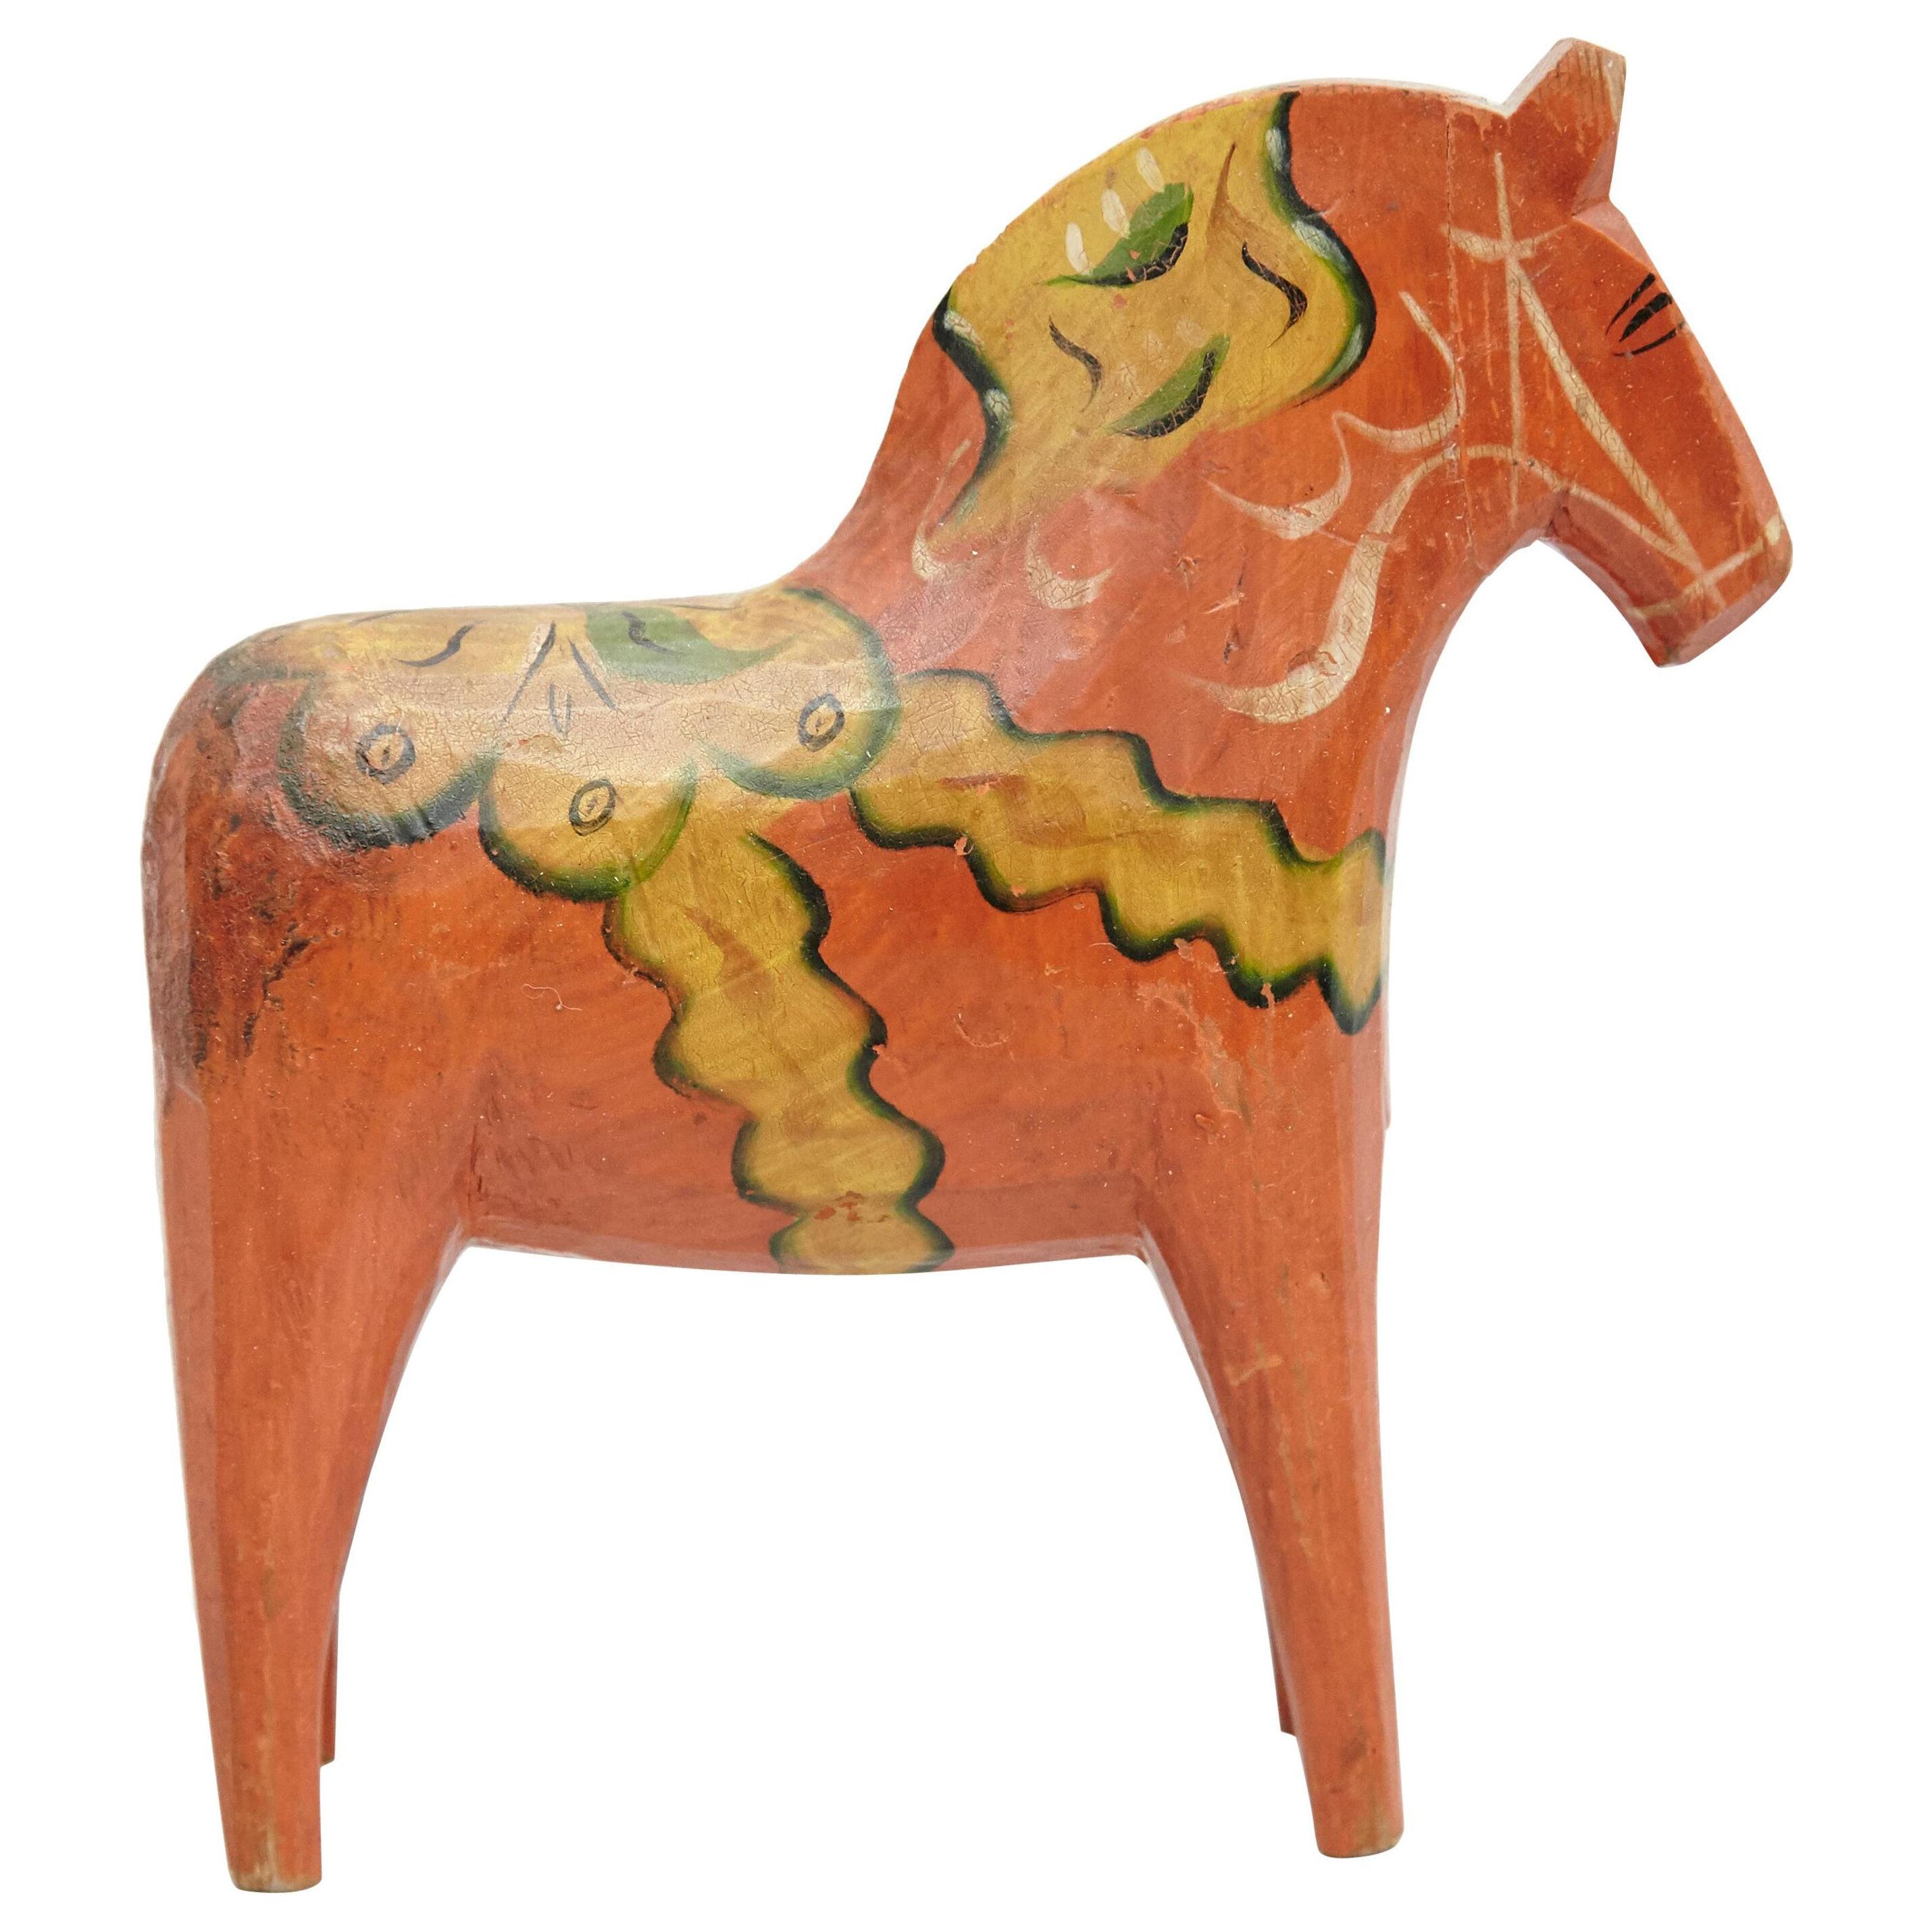 Swedish Folk Wooden Horse Toy, circa 1920